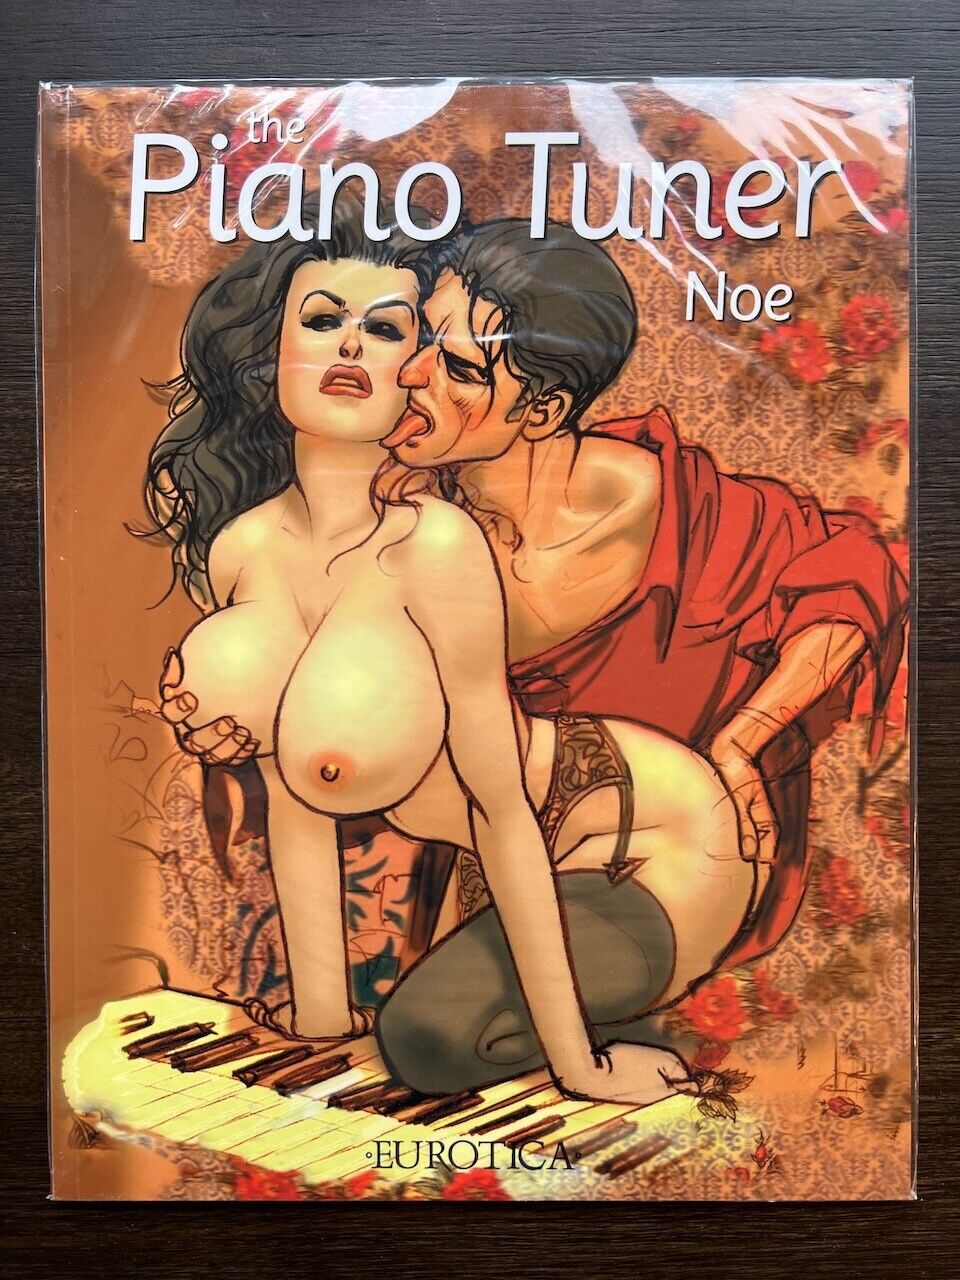 The Piano Tuner by Ignacio Noe Eurotica TPB [c2]